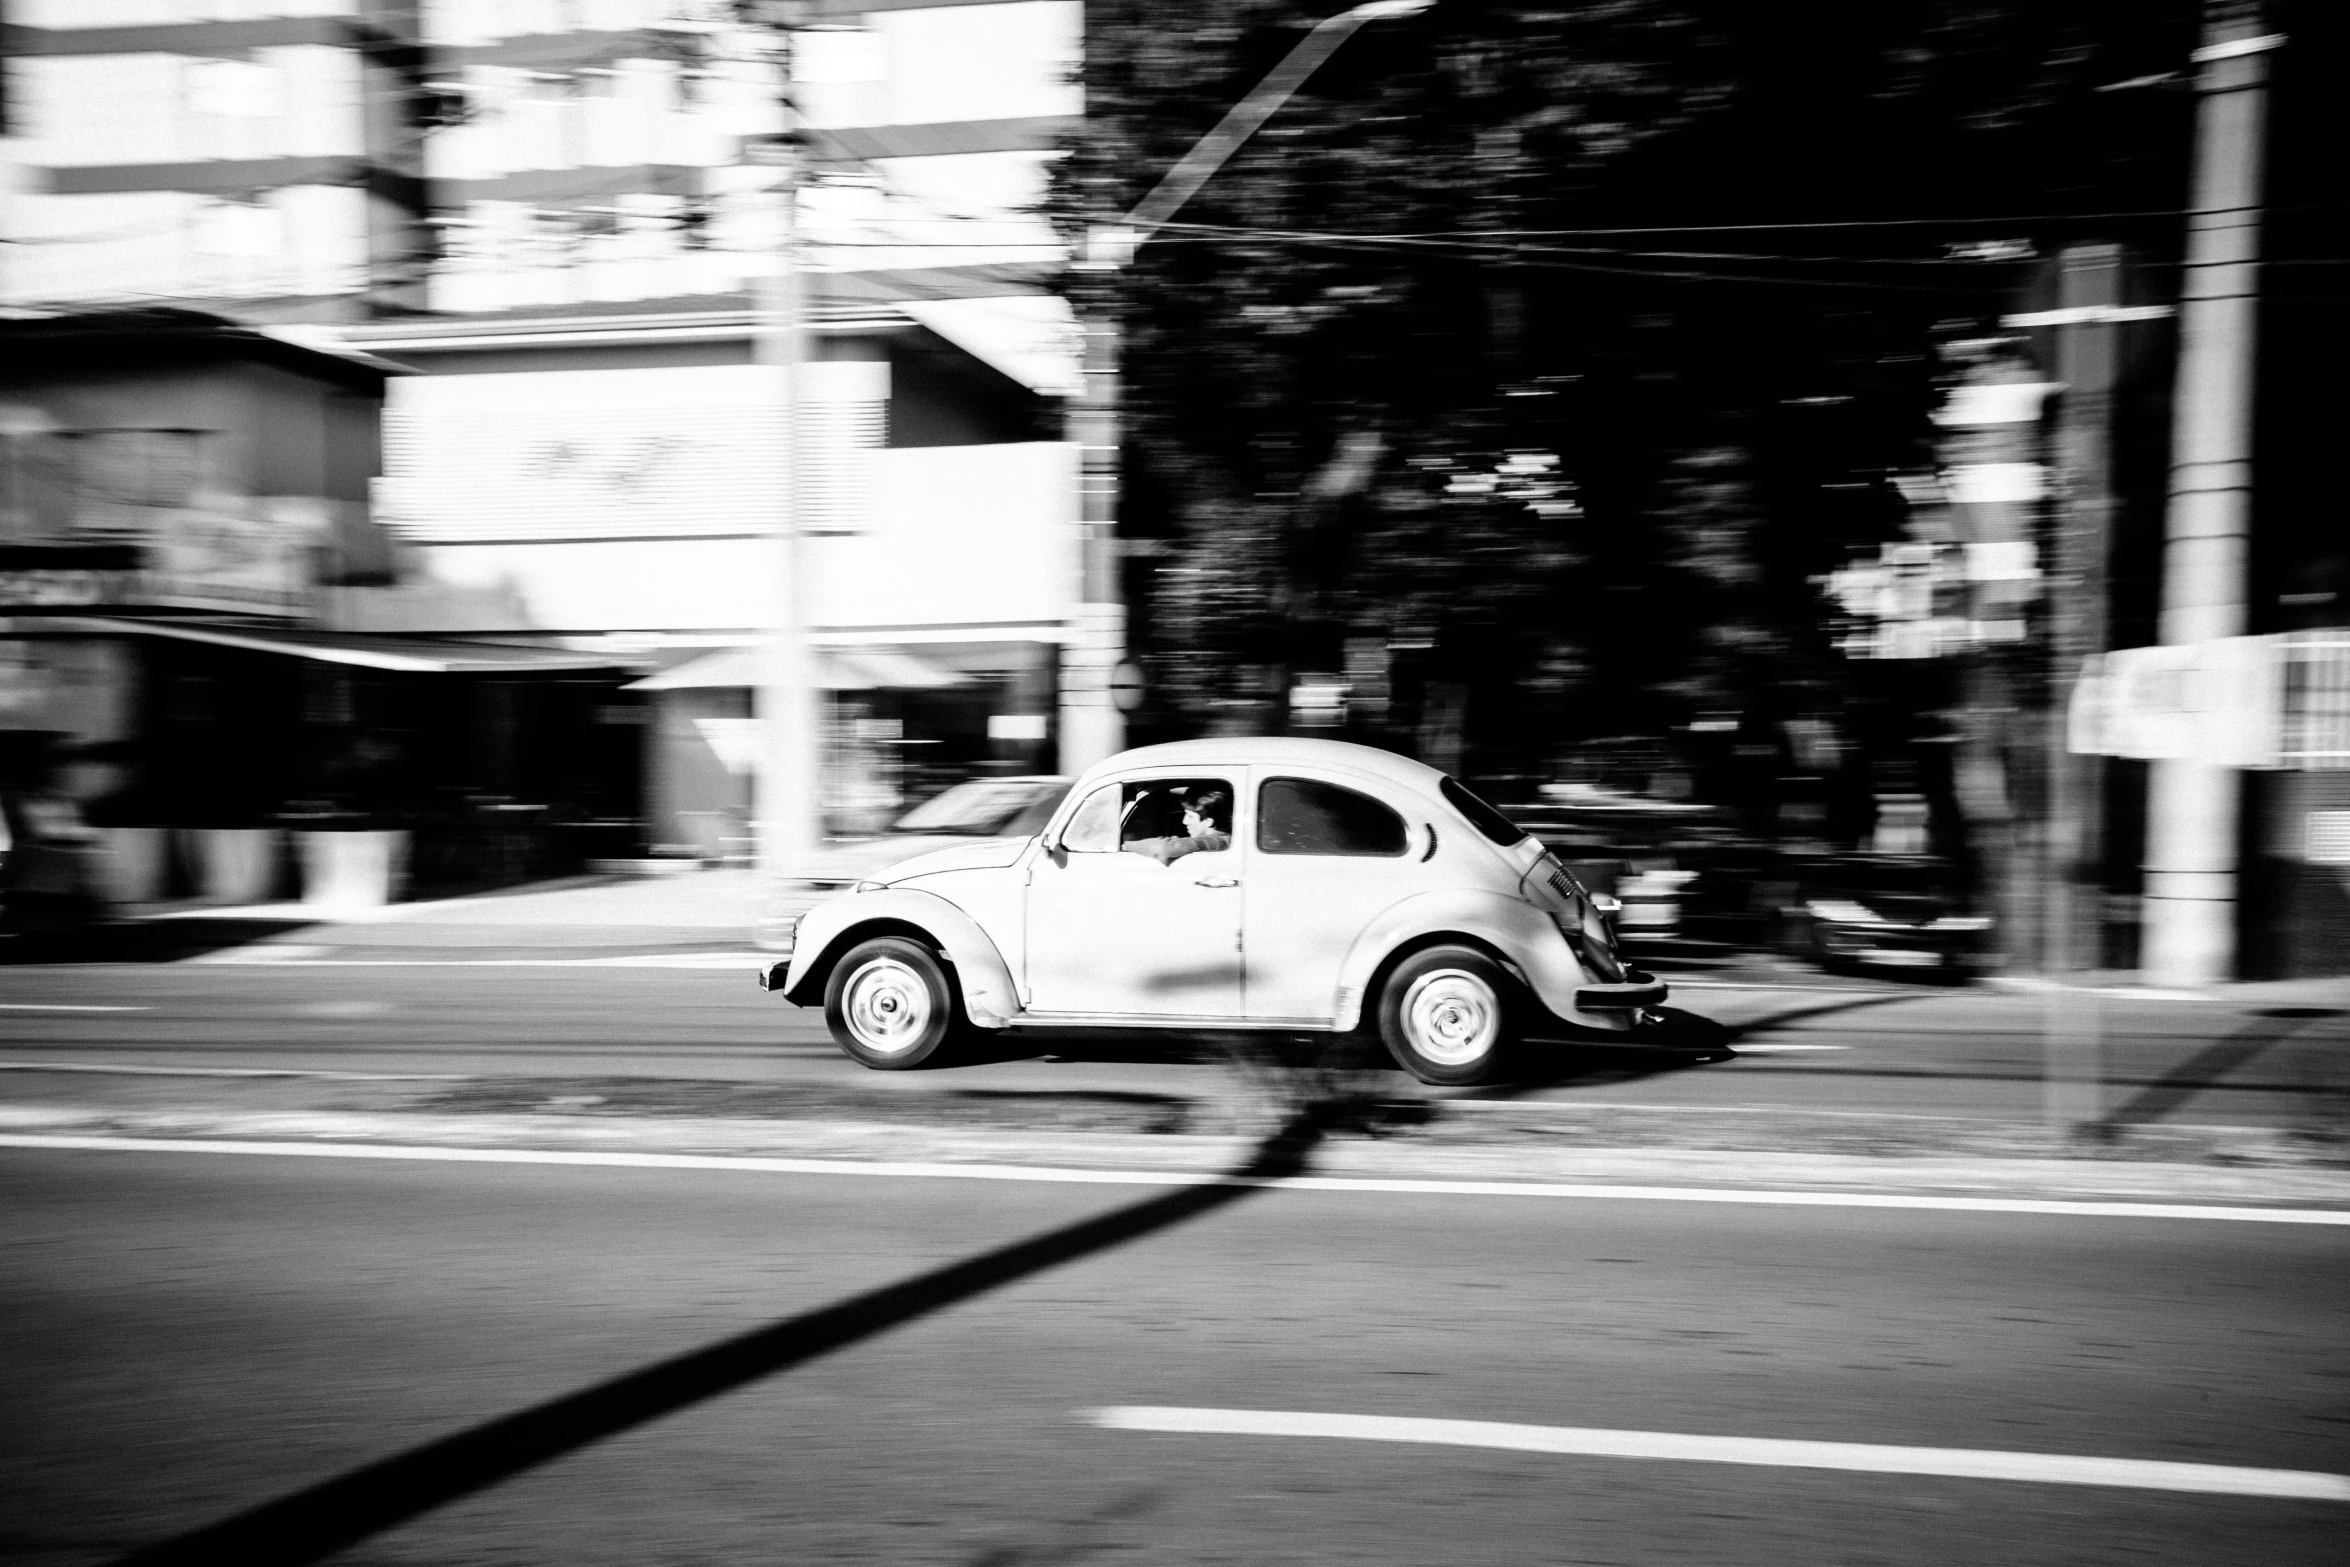 an old car sitting on a city street